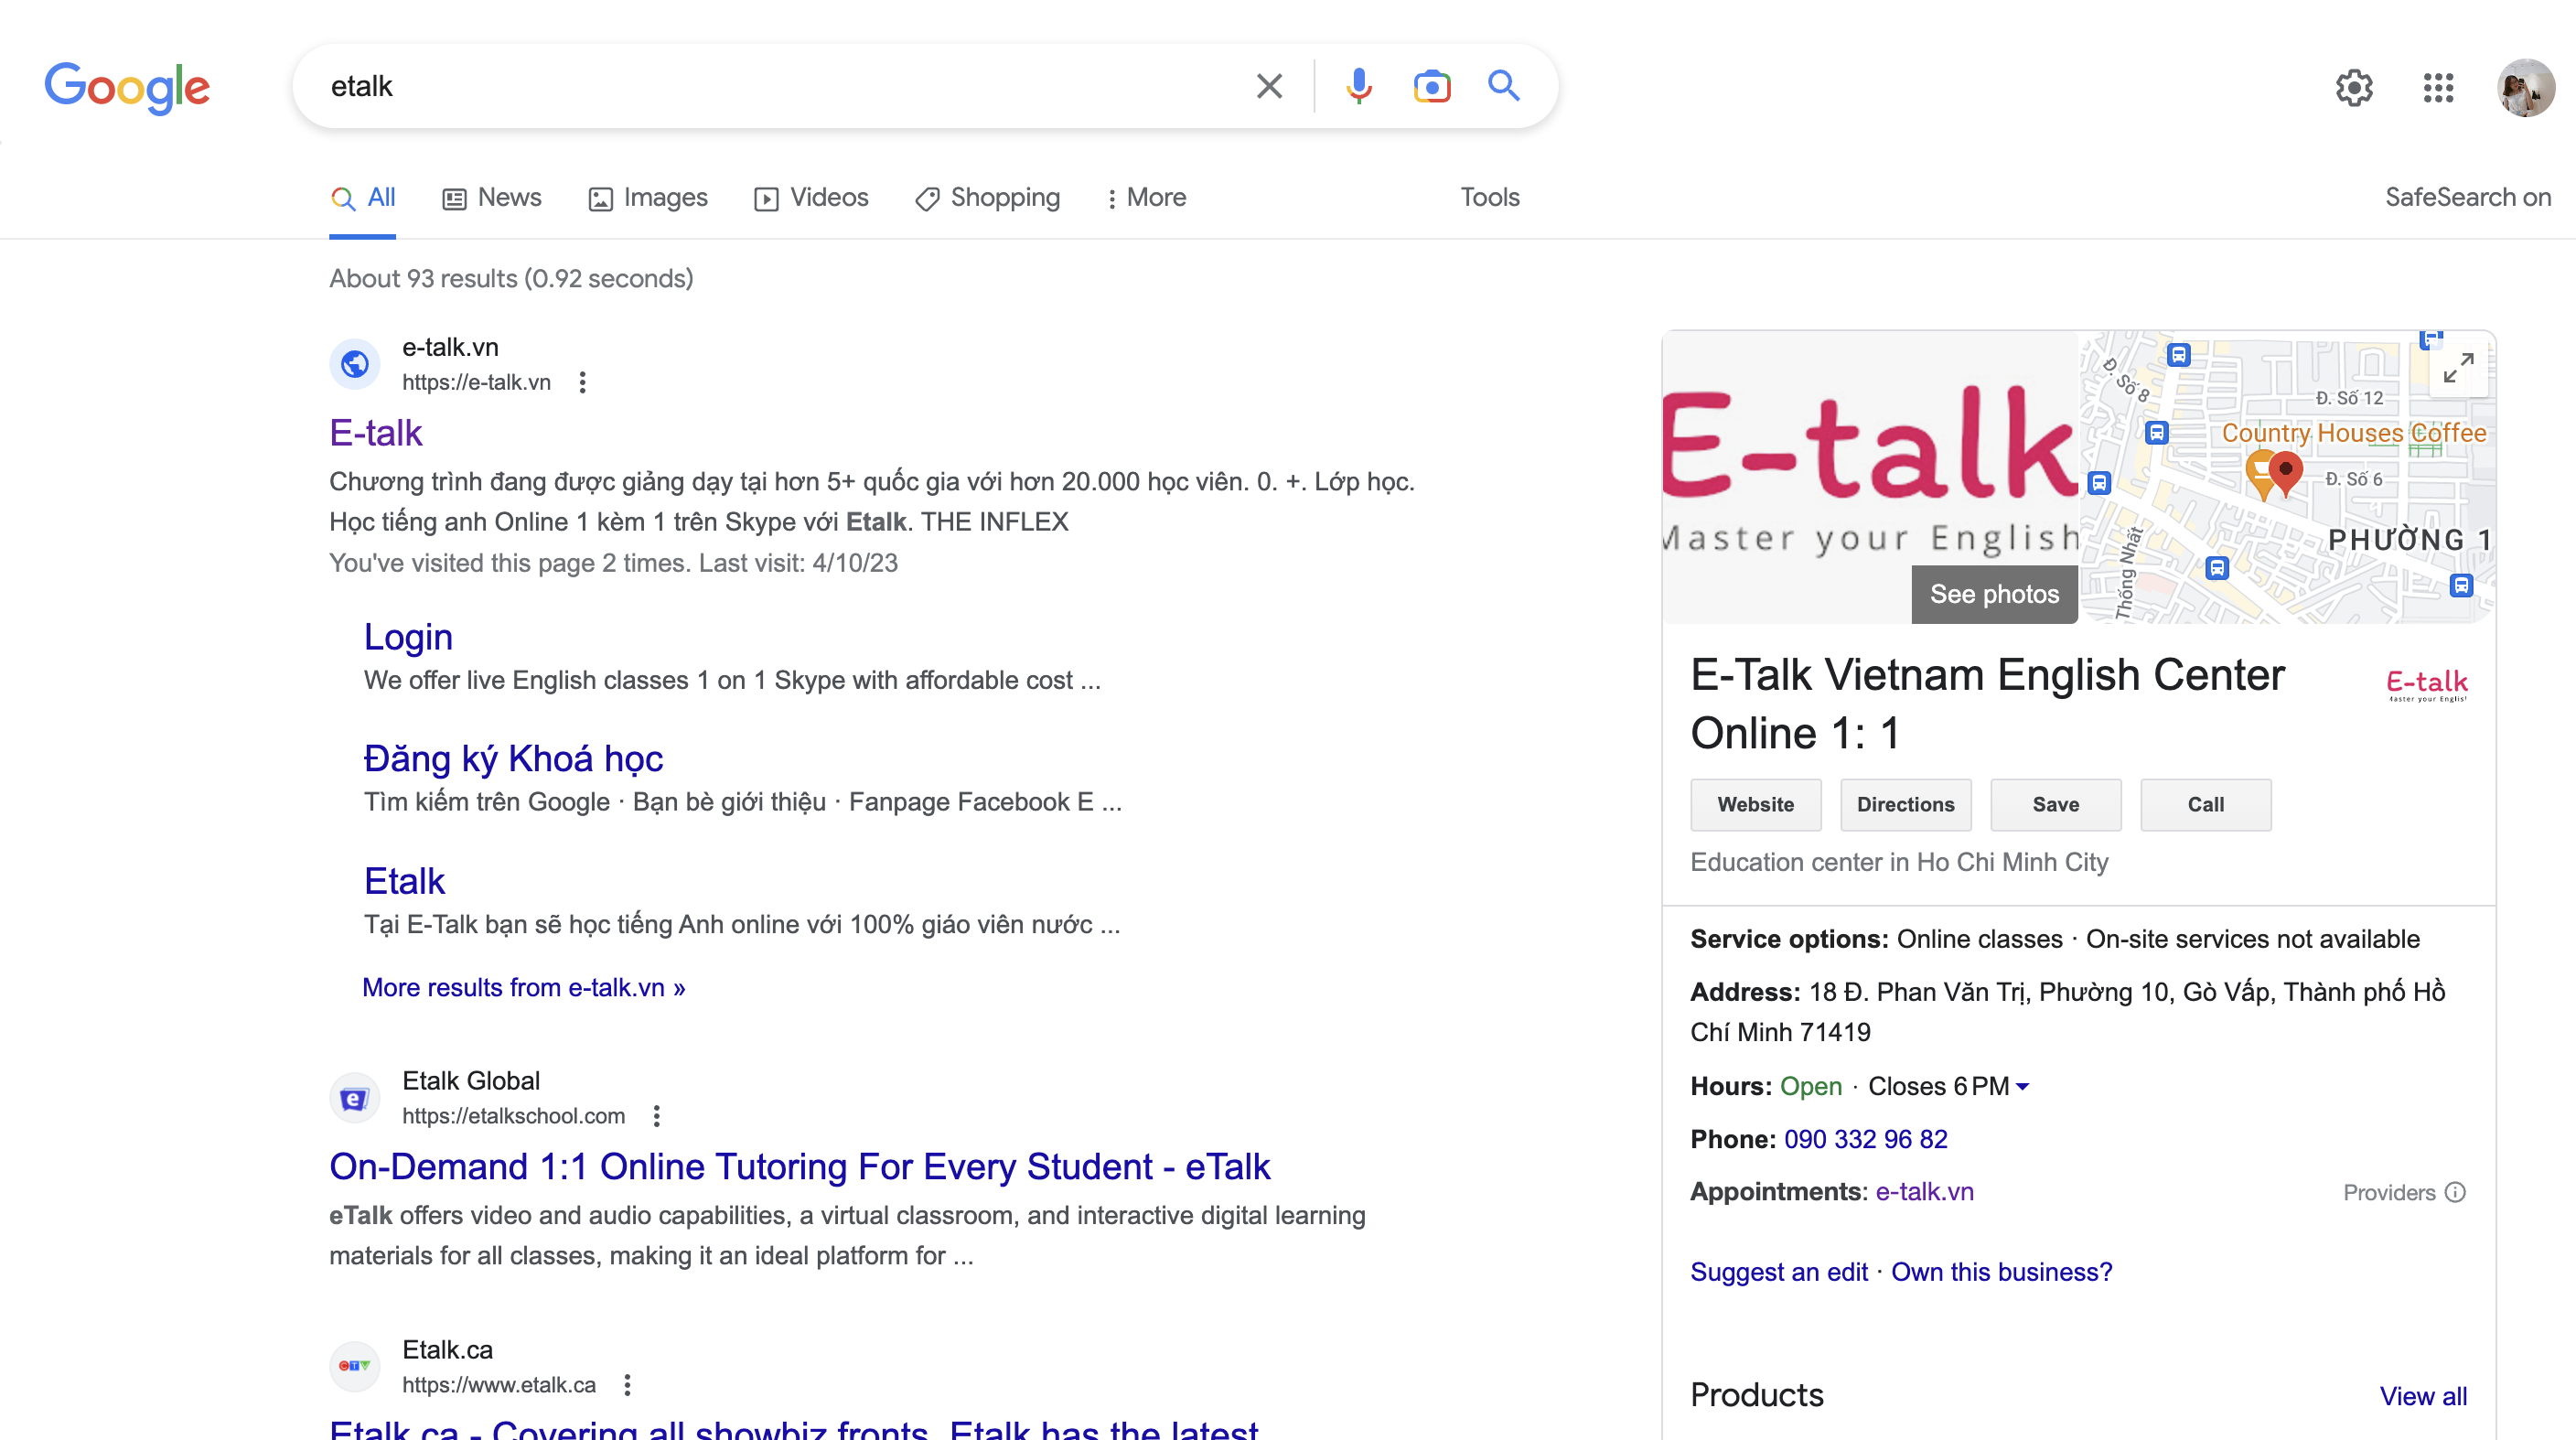 etalk trên Google Search và Google Map